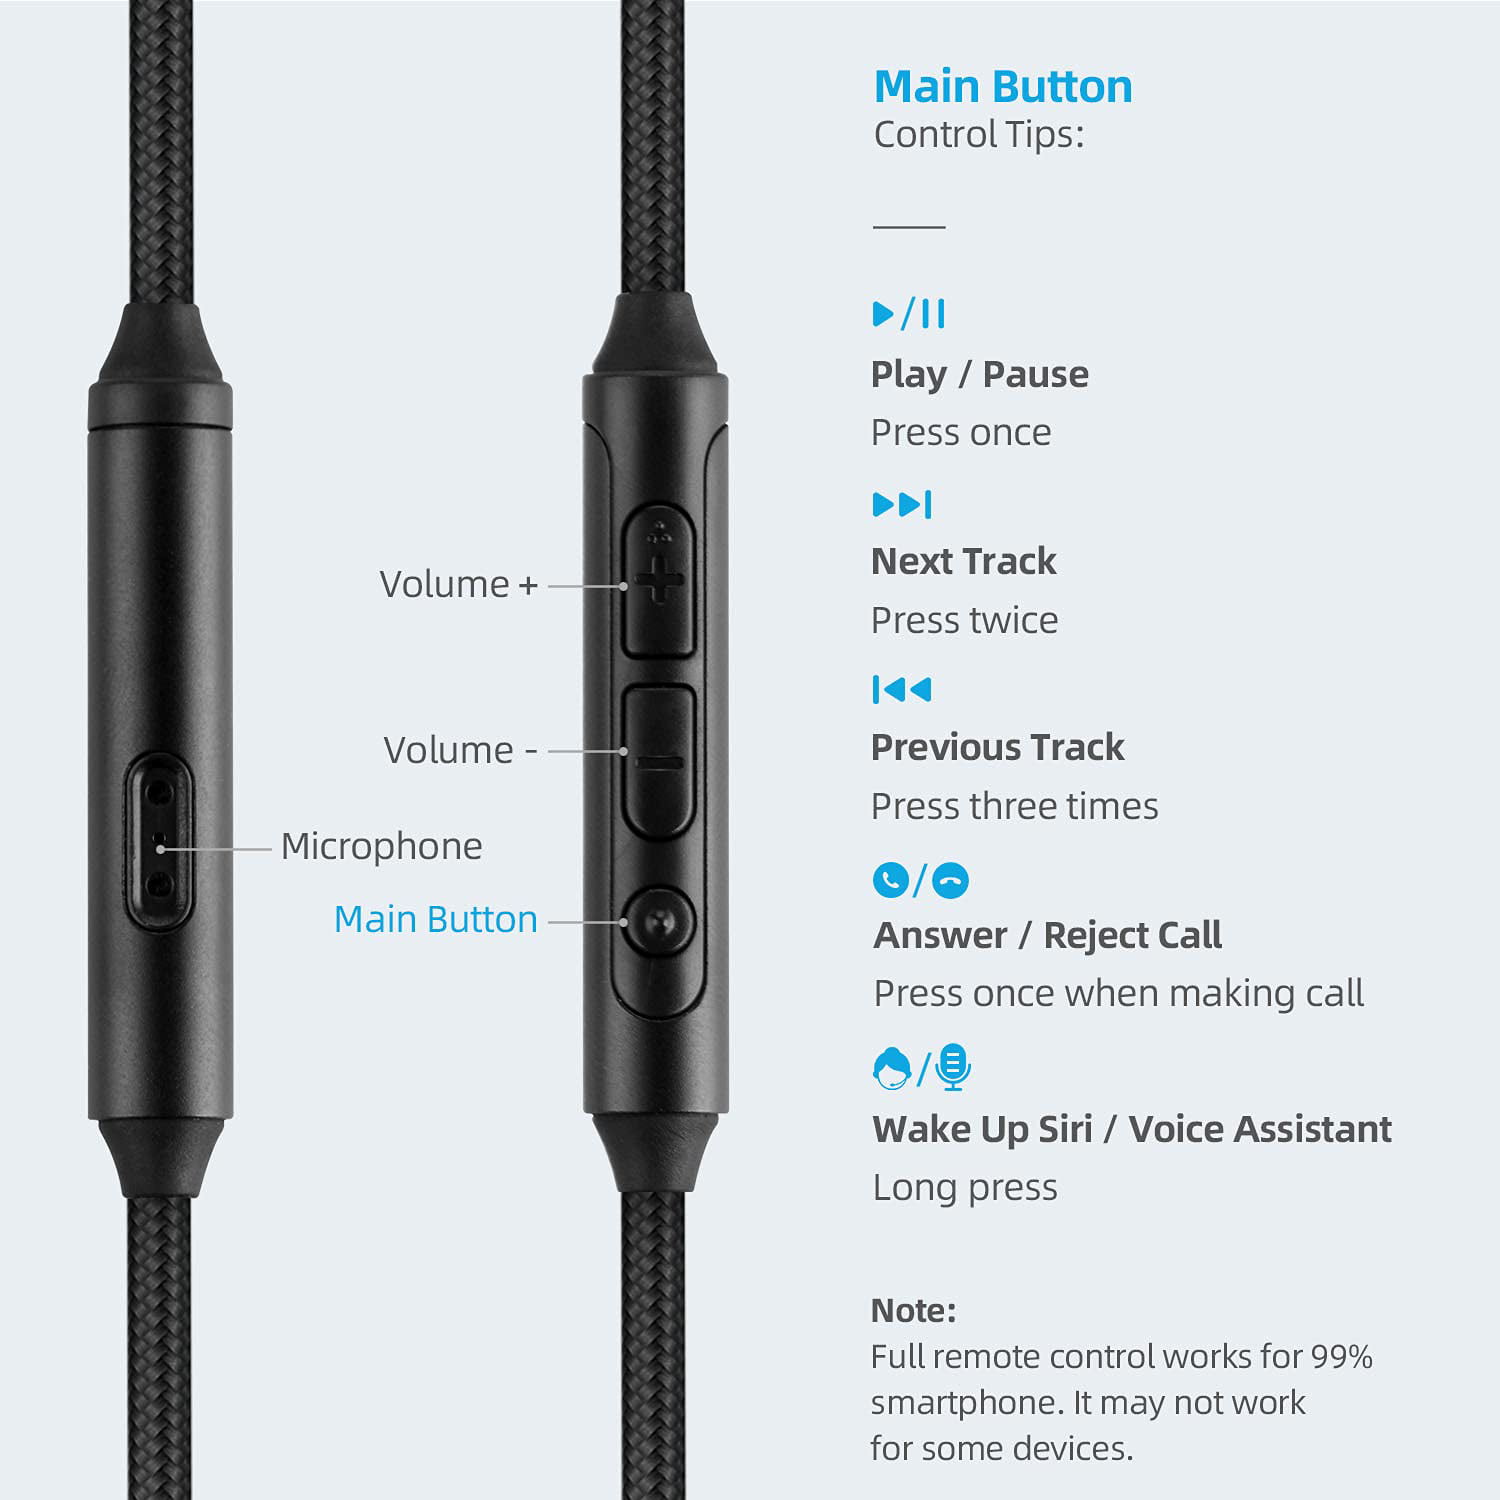 Replacement Cable Cord with Mic for Bose QuietComfort QC35 QC35II QC25 QC45 Headphones, JBL E45BT - Walmart.com